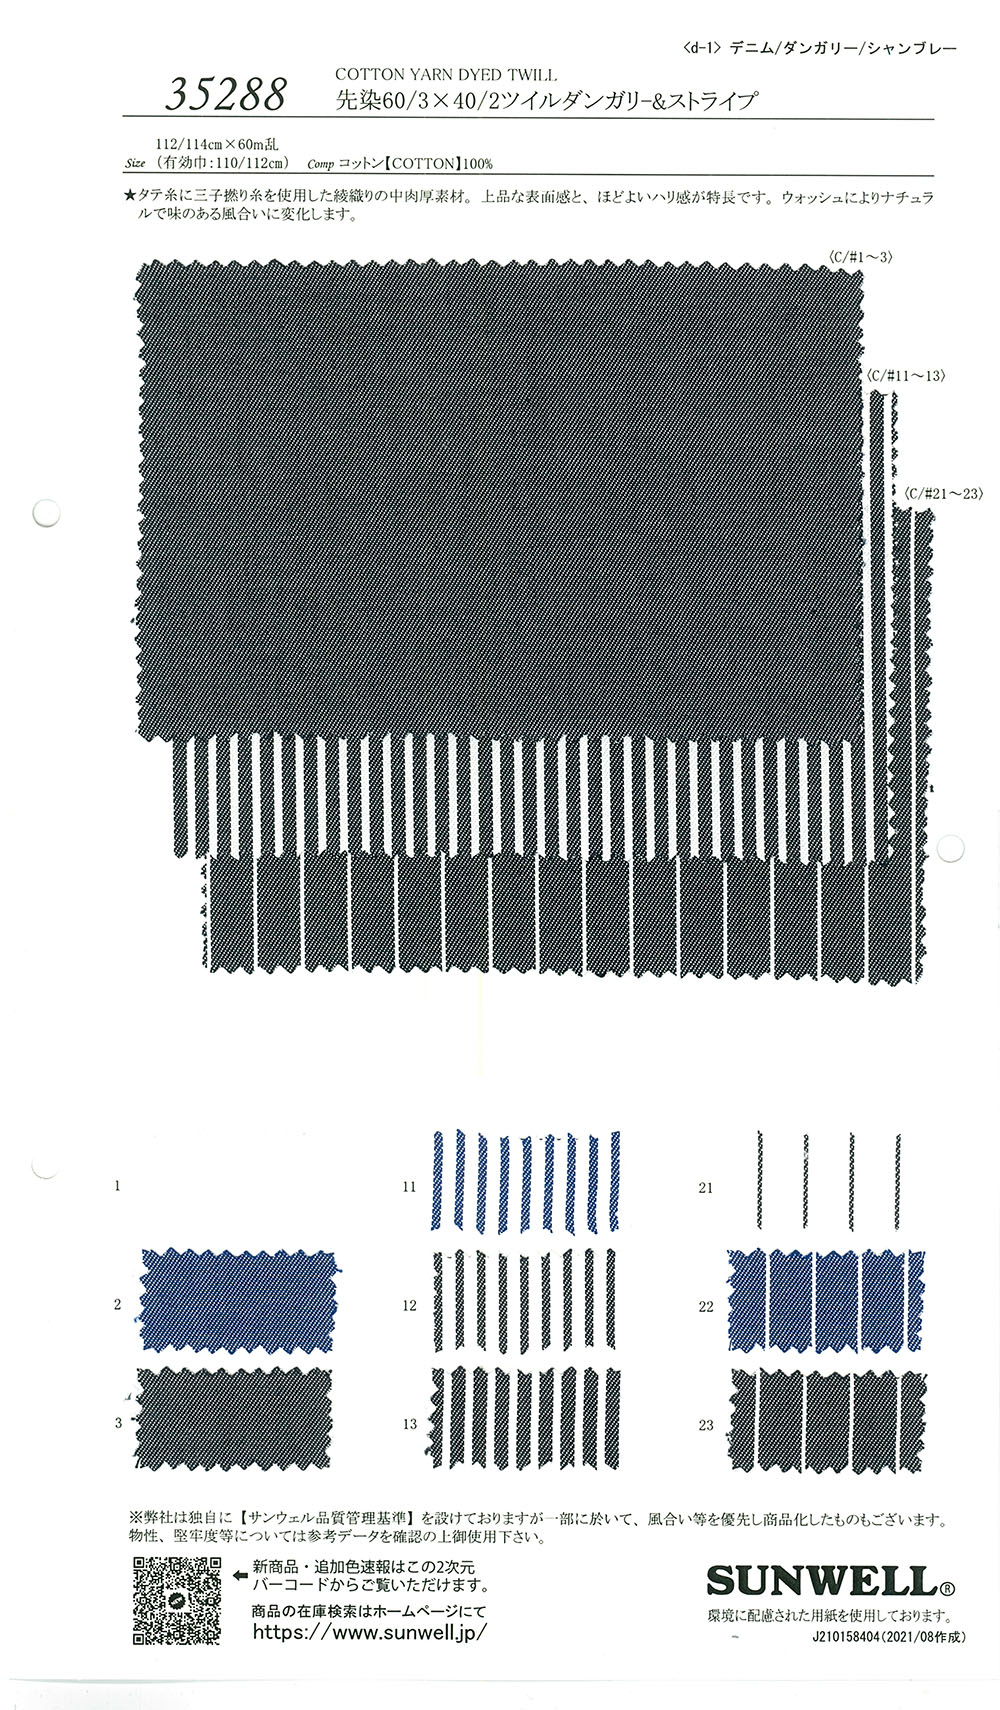 35288 Peto De Sarga 60/3×40/2 Teñido En Hilo Y Rayas[Fabrica Textil] SUNWELL